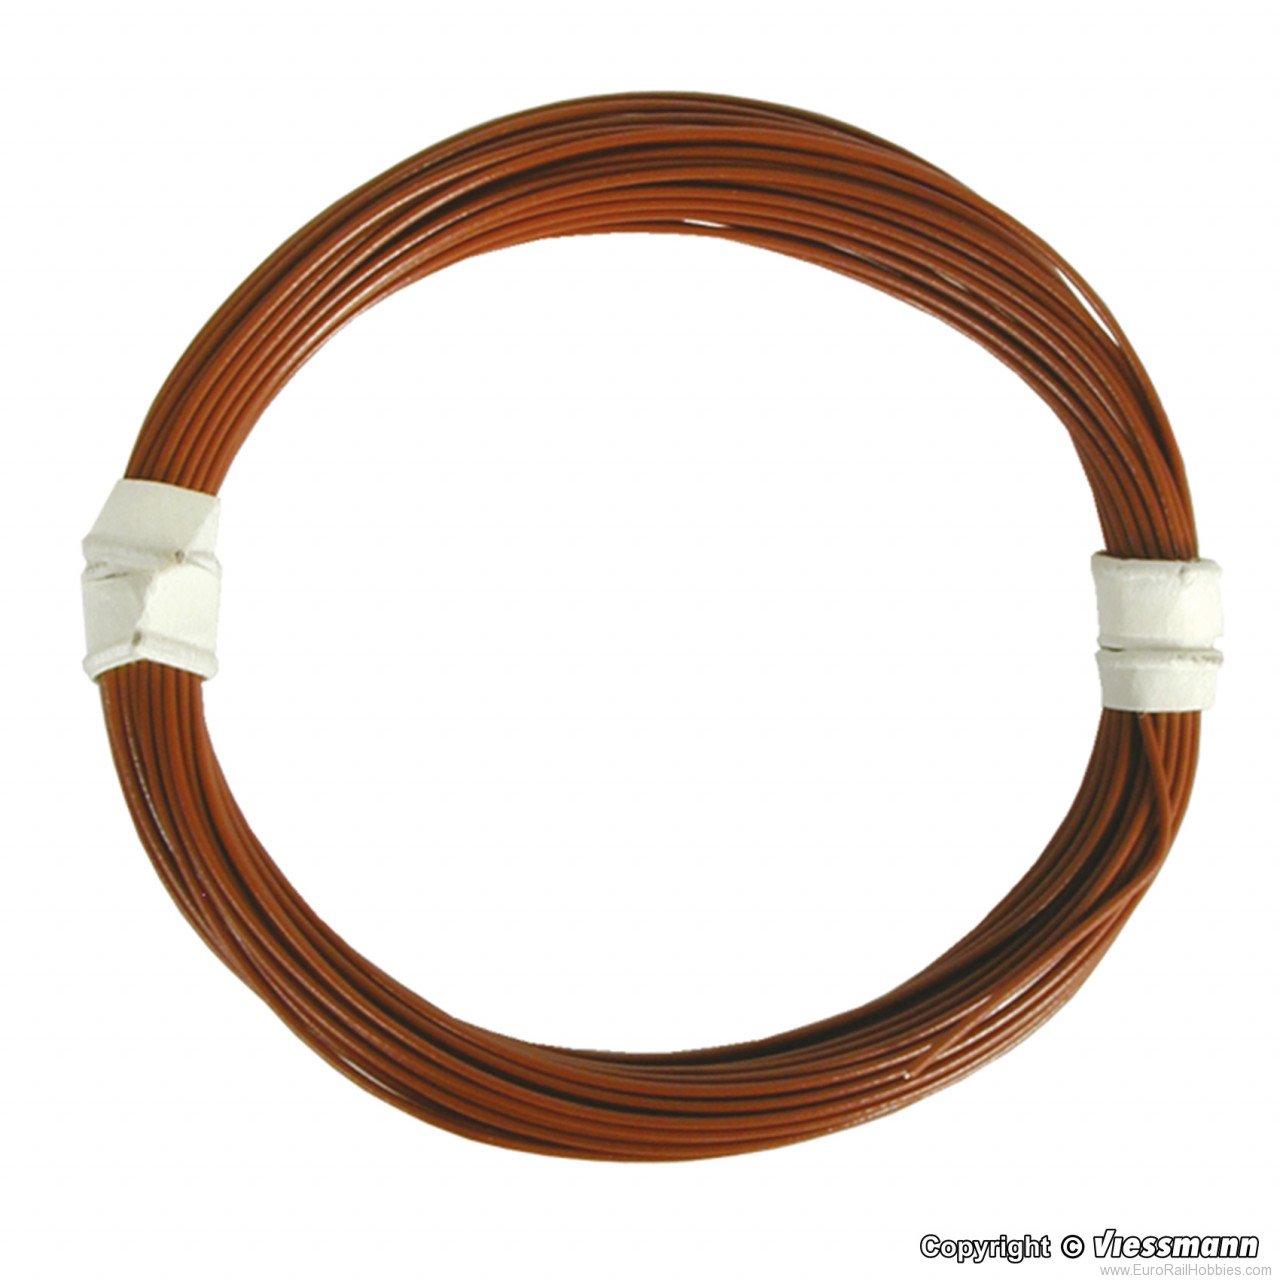 Viessmann 6892 Super thin special wire, 0,03 mm dia., brown,